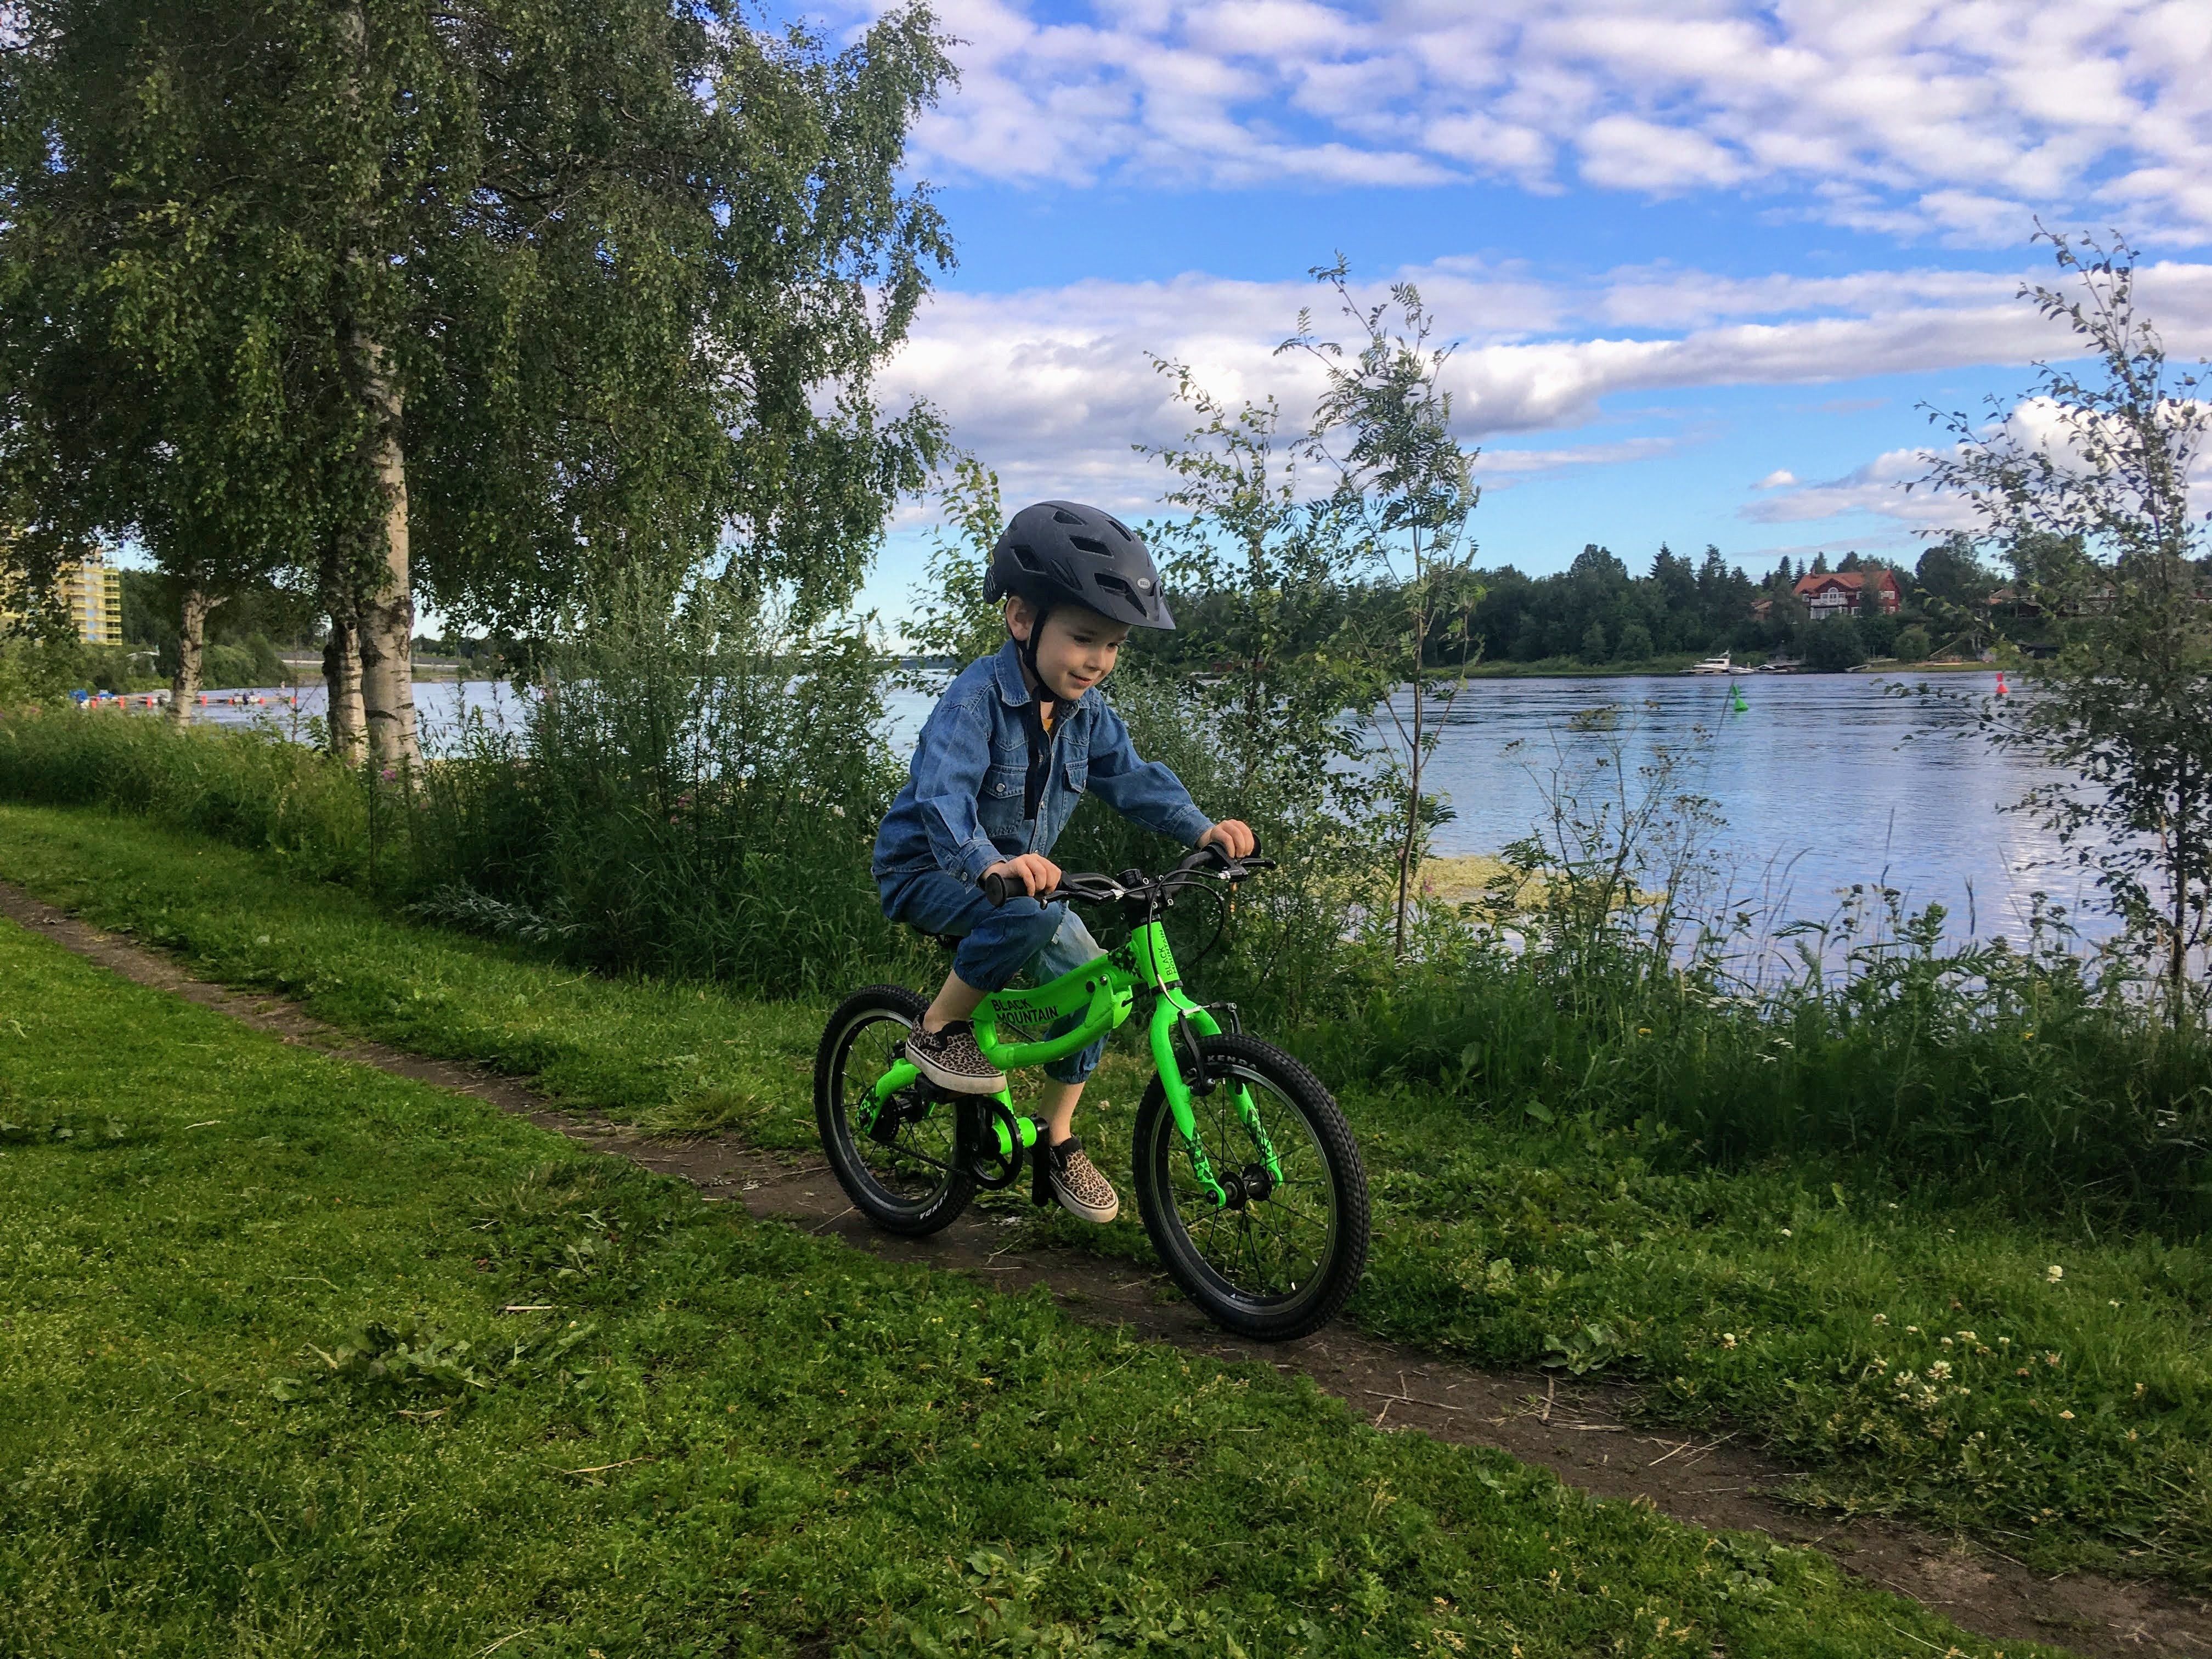  Child on kids bike riding by lake